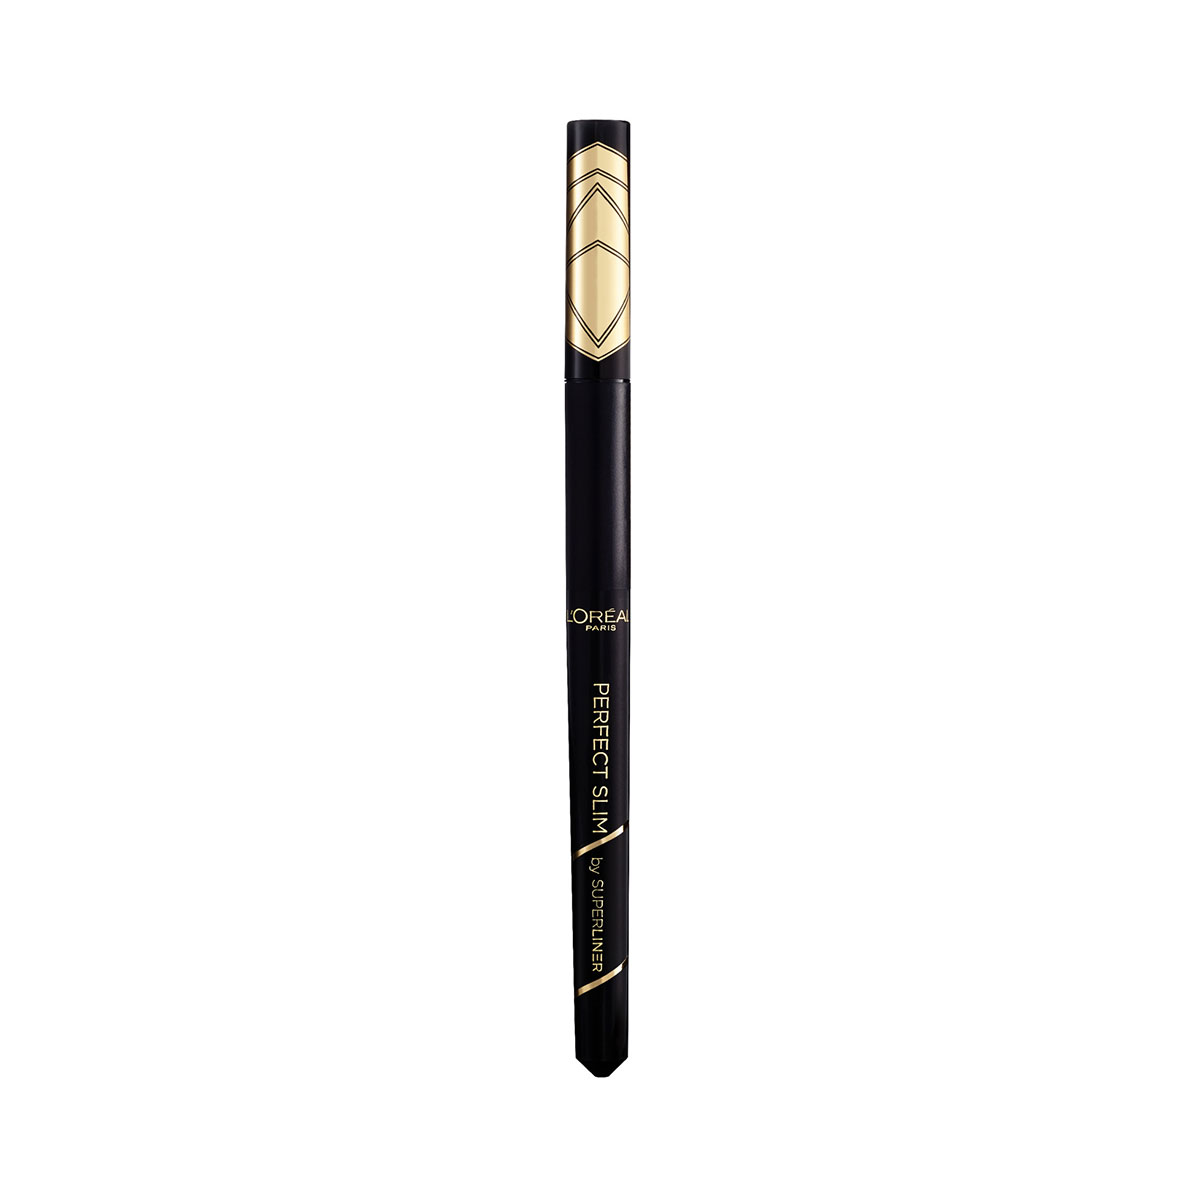 L'Oréal Paris Superliner Perfect Slim Liquid Smudge-proof Eyeliner 8g 01 Intense Black